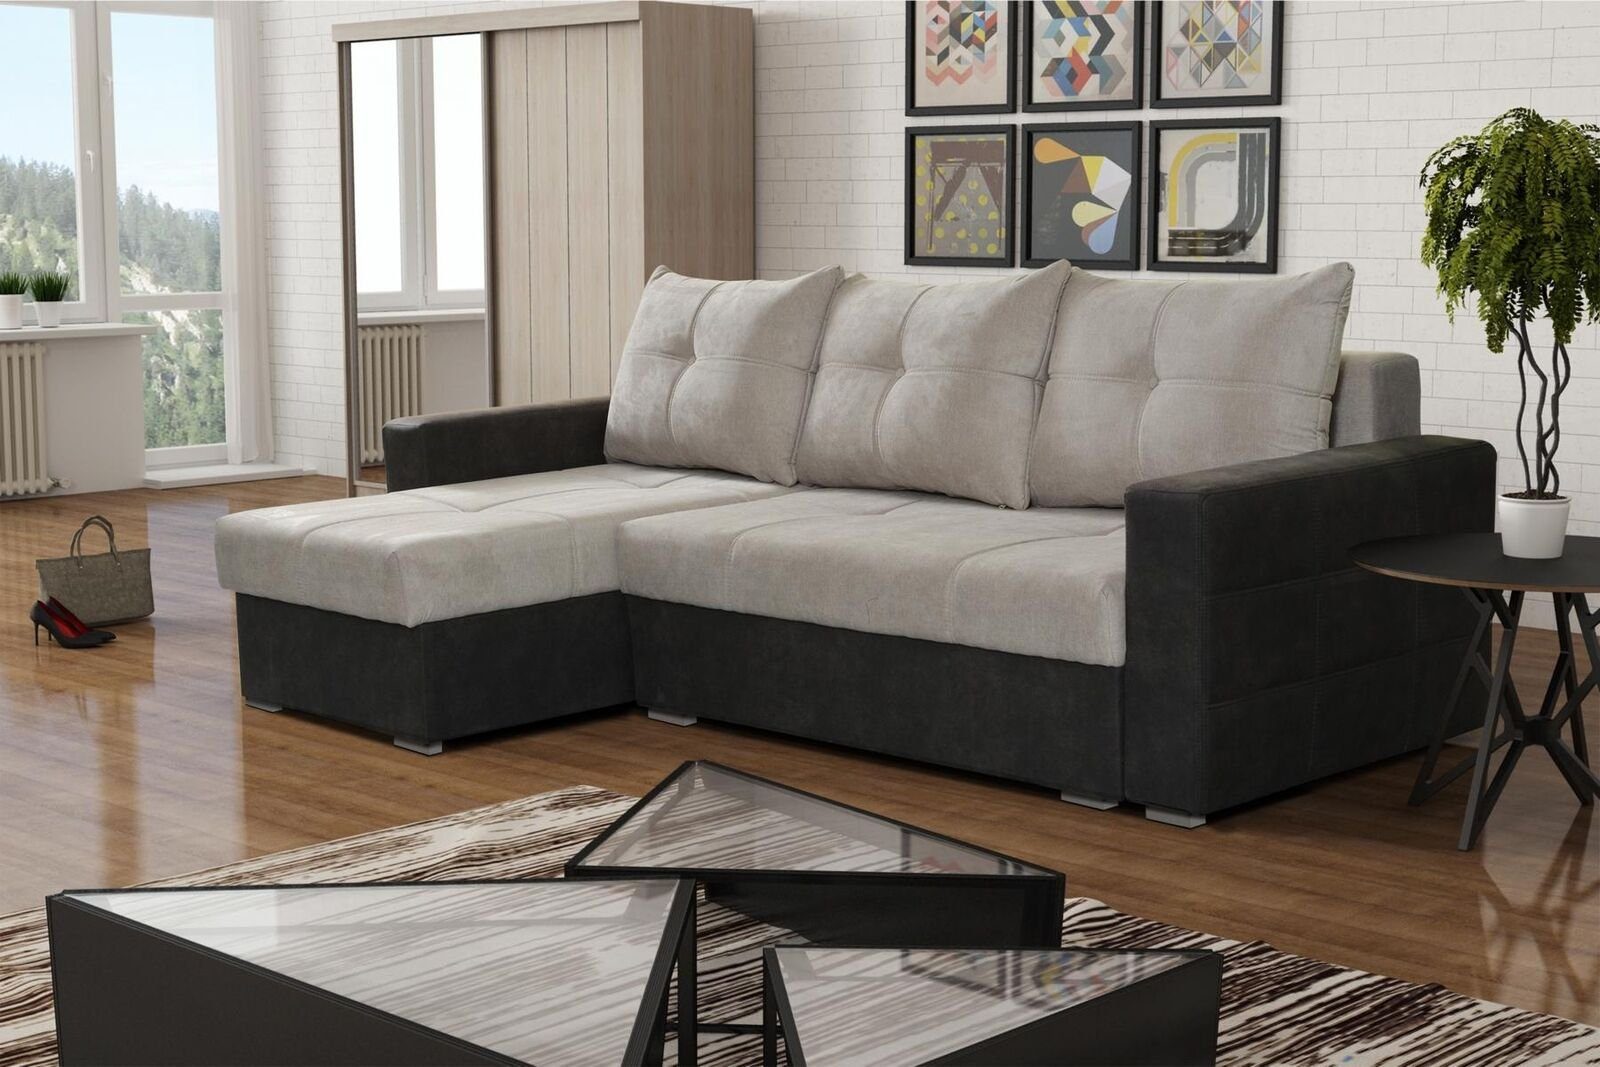 JVmoebel Ecksofa, Luxus Ecke Möbel L-Form Italien Edel Sofas Modern Couch Textil Beige